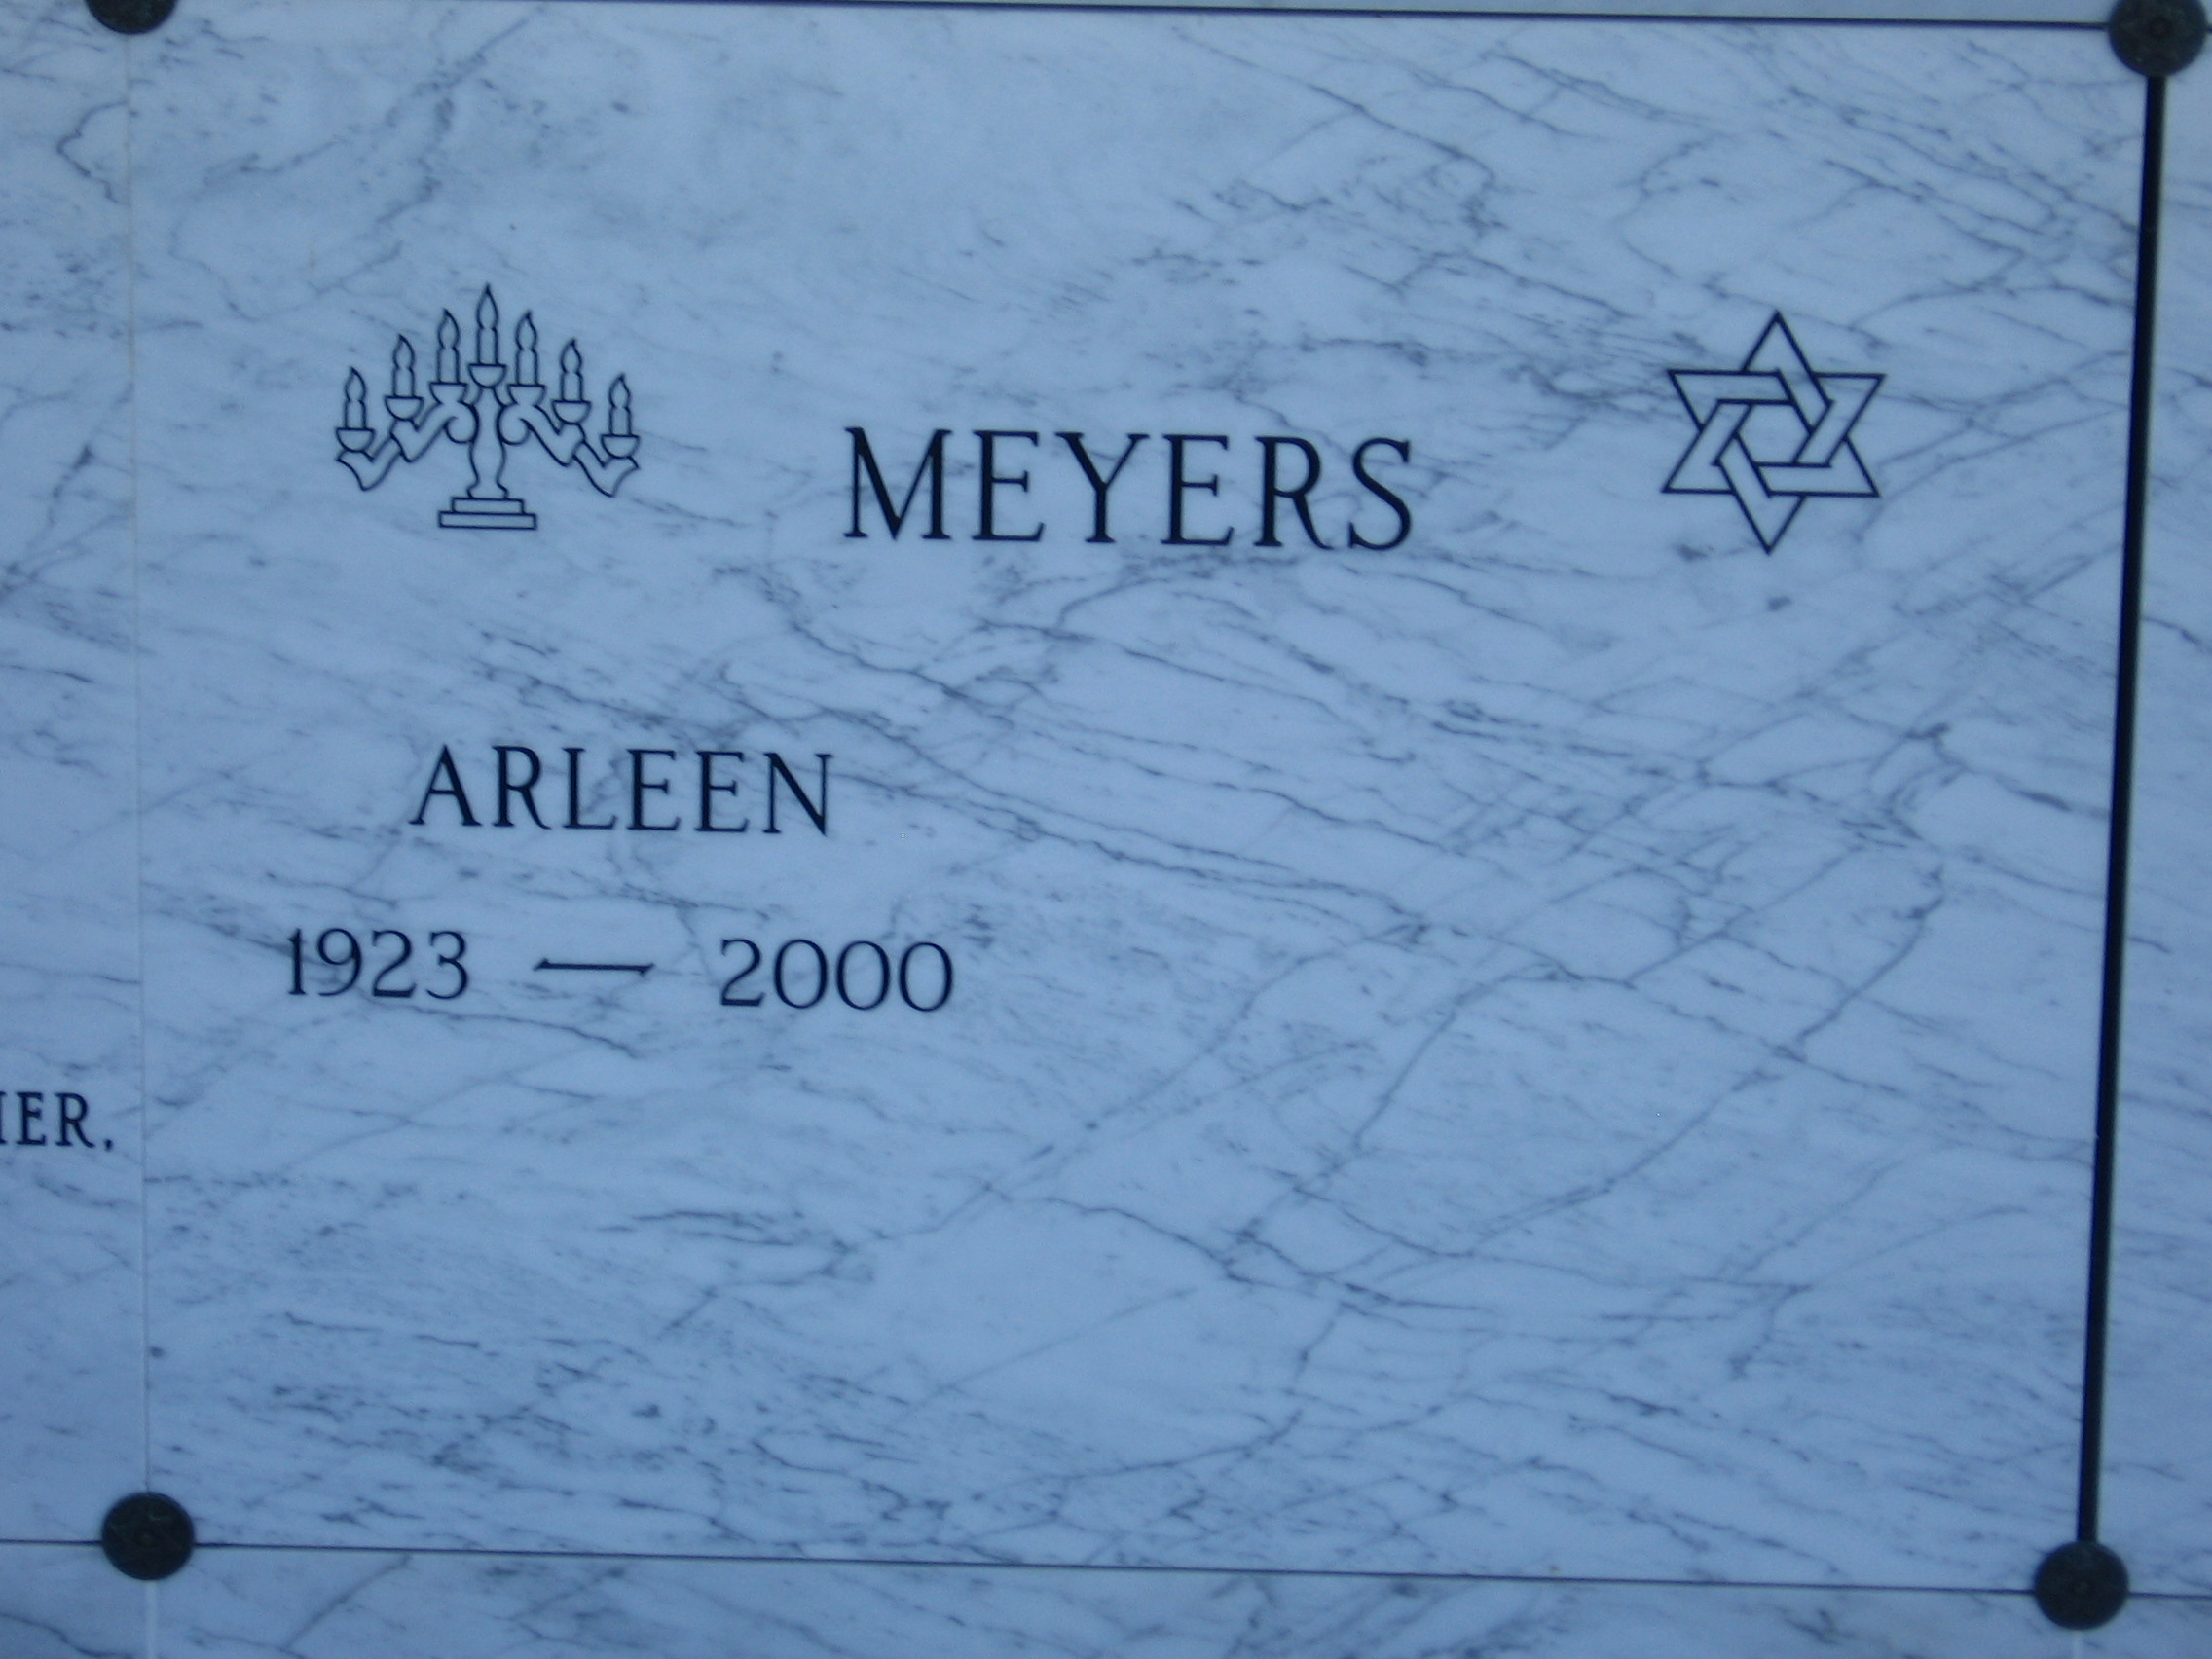 Arleen Meyers